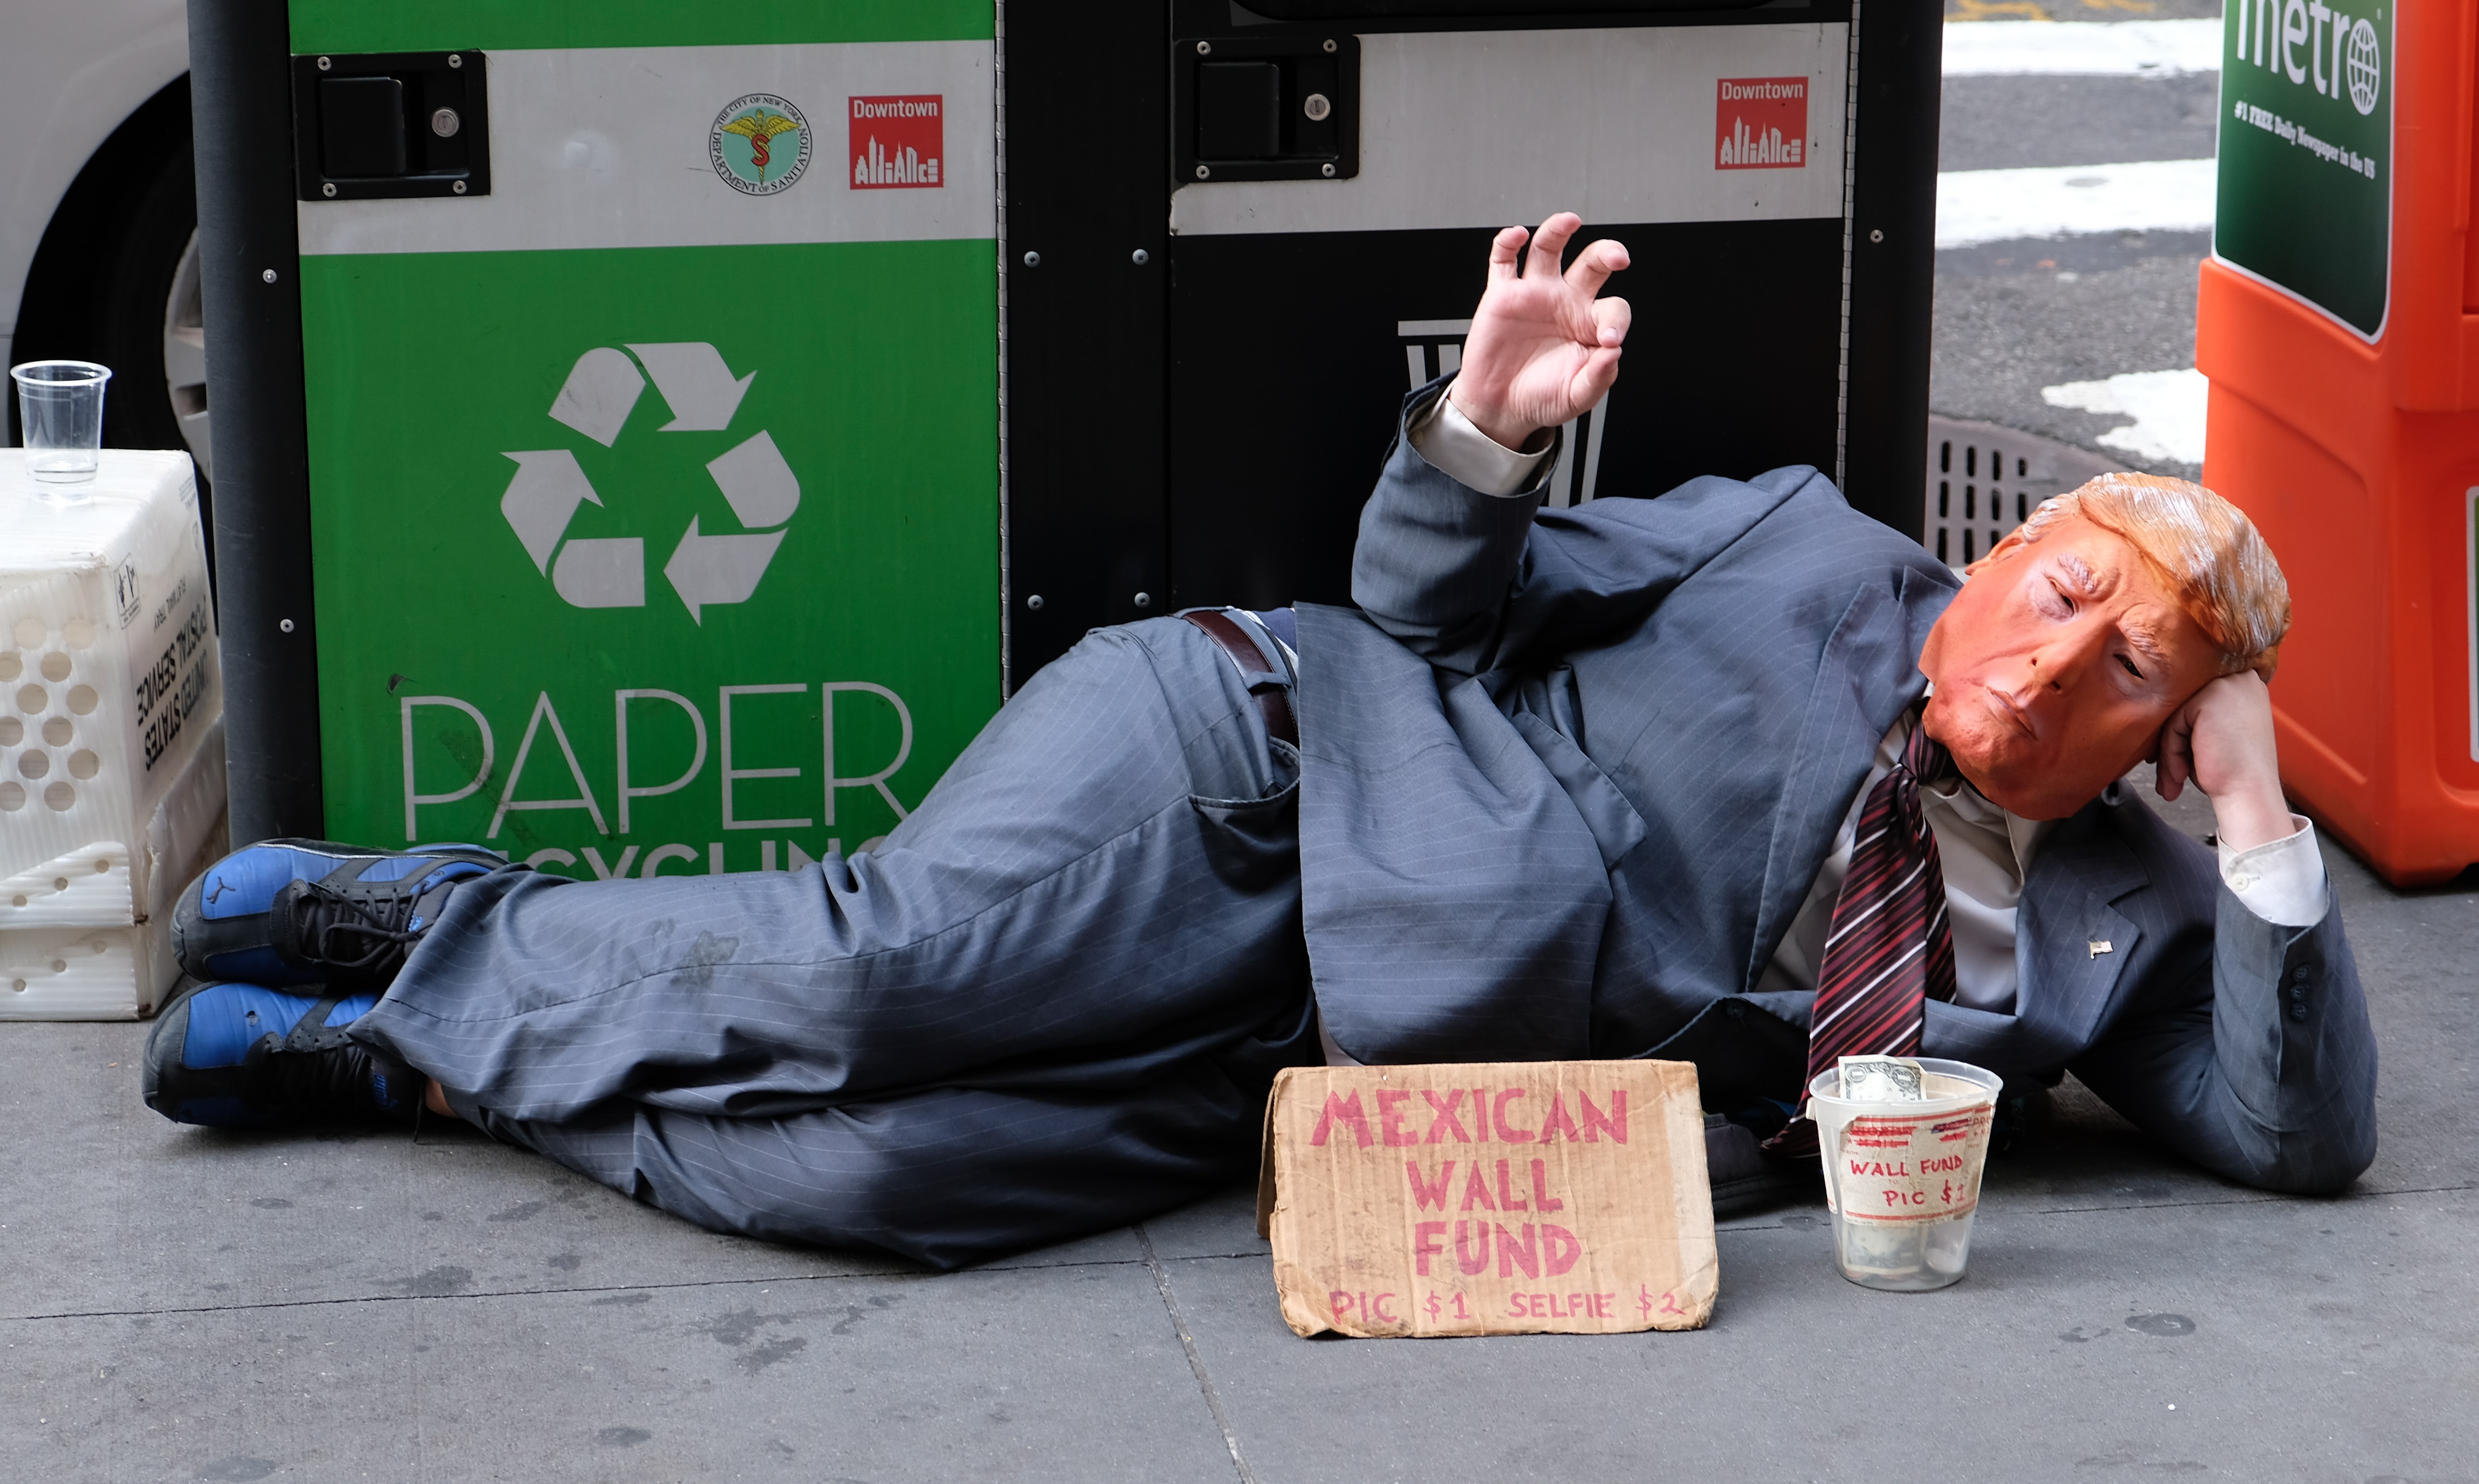 Donald Trump street performer https://unsplash.com/photos/GiKkKIaF5C0